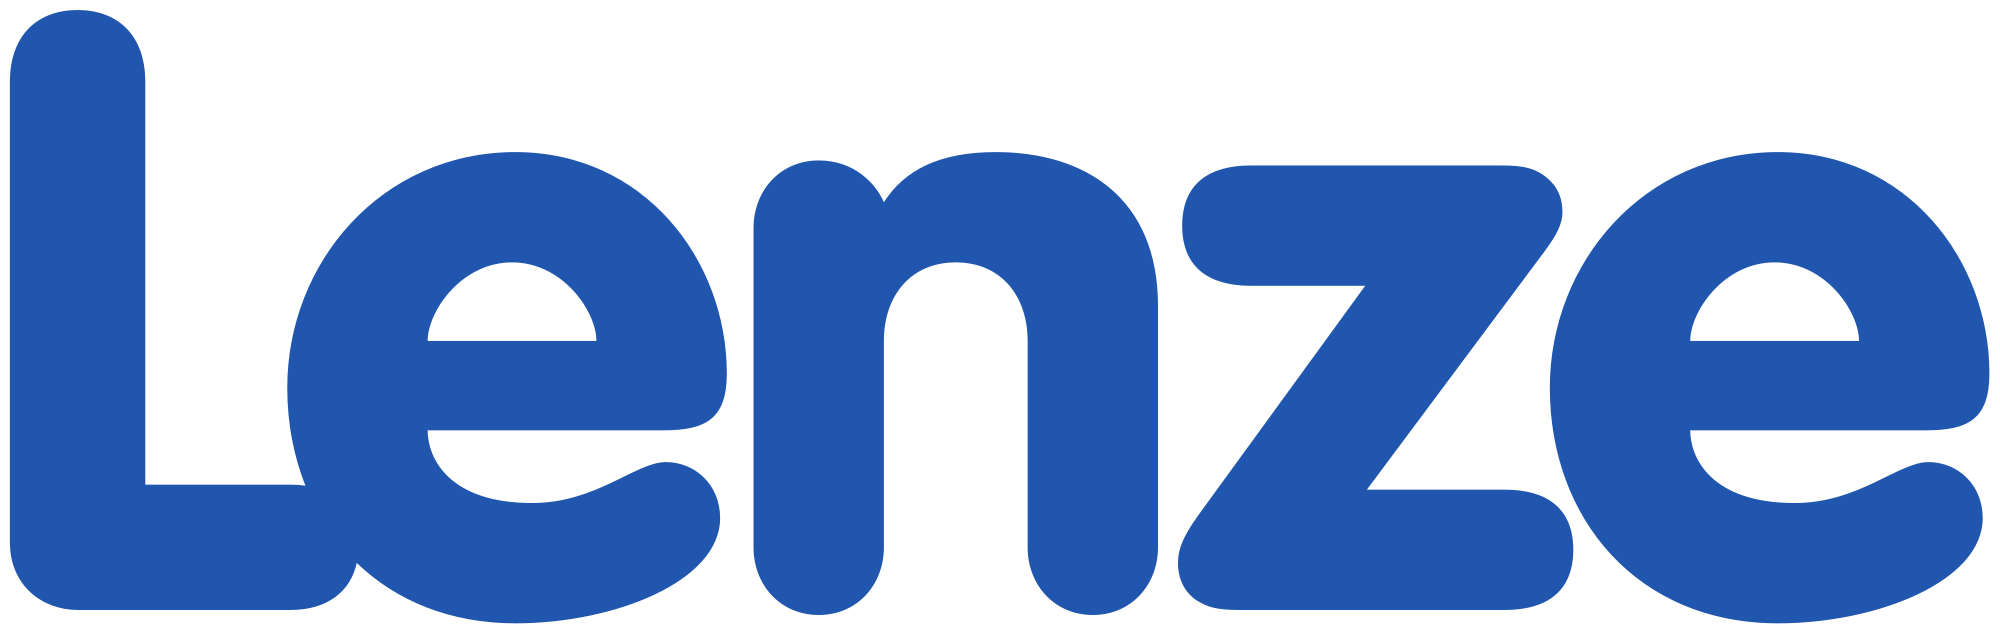 Lenze Logo.png